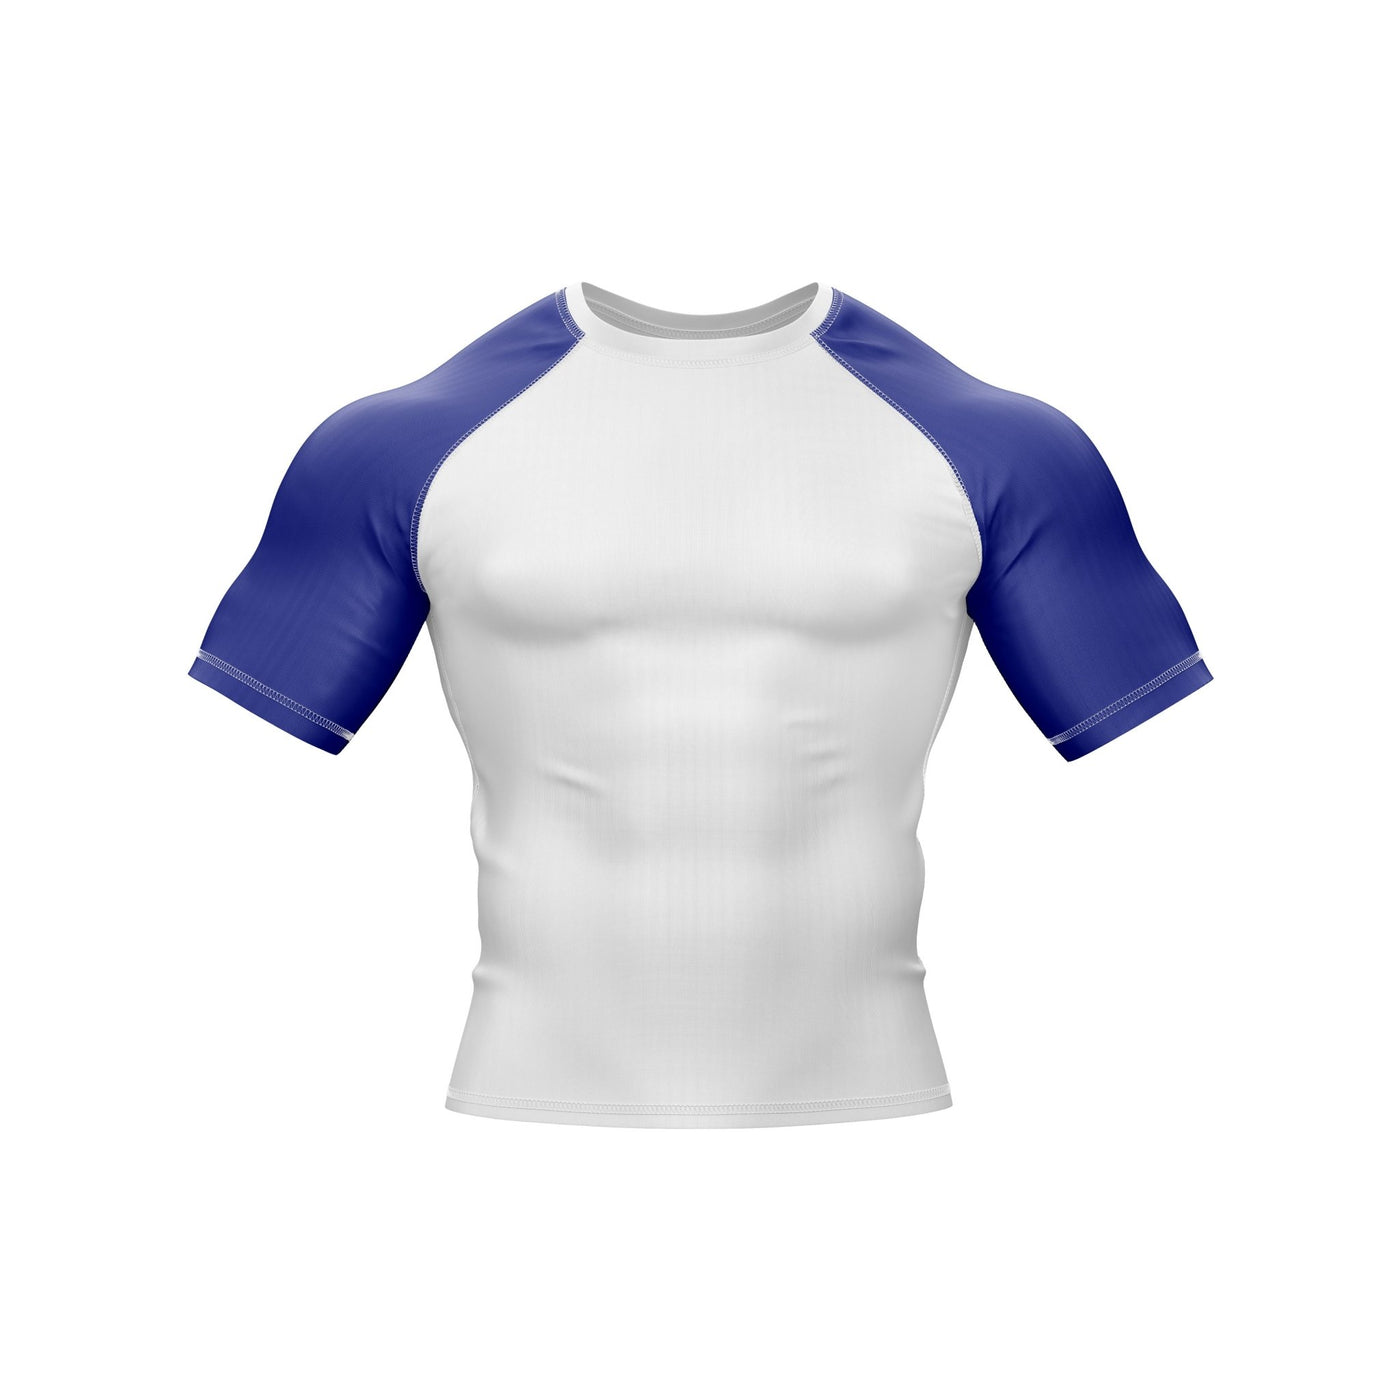 White with Blue Sleeves Ranked Rashguard - Summo Sports